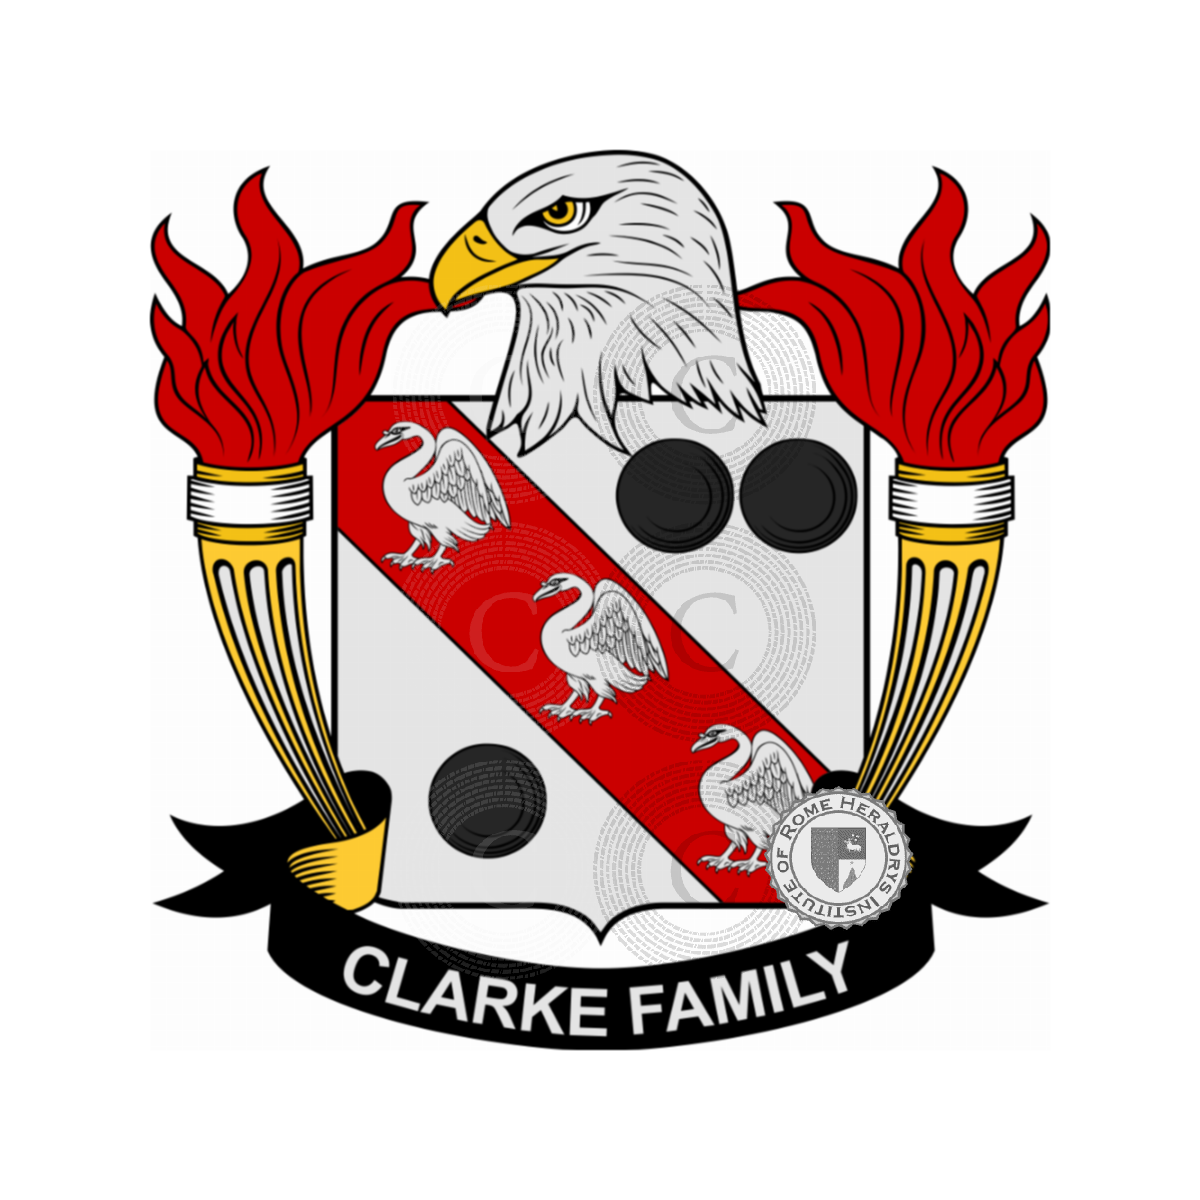 Stemma della famigliaClarke, Clarke of Dunham,Clarke of Rupertswood